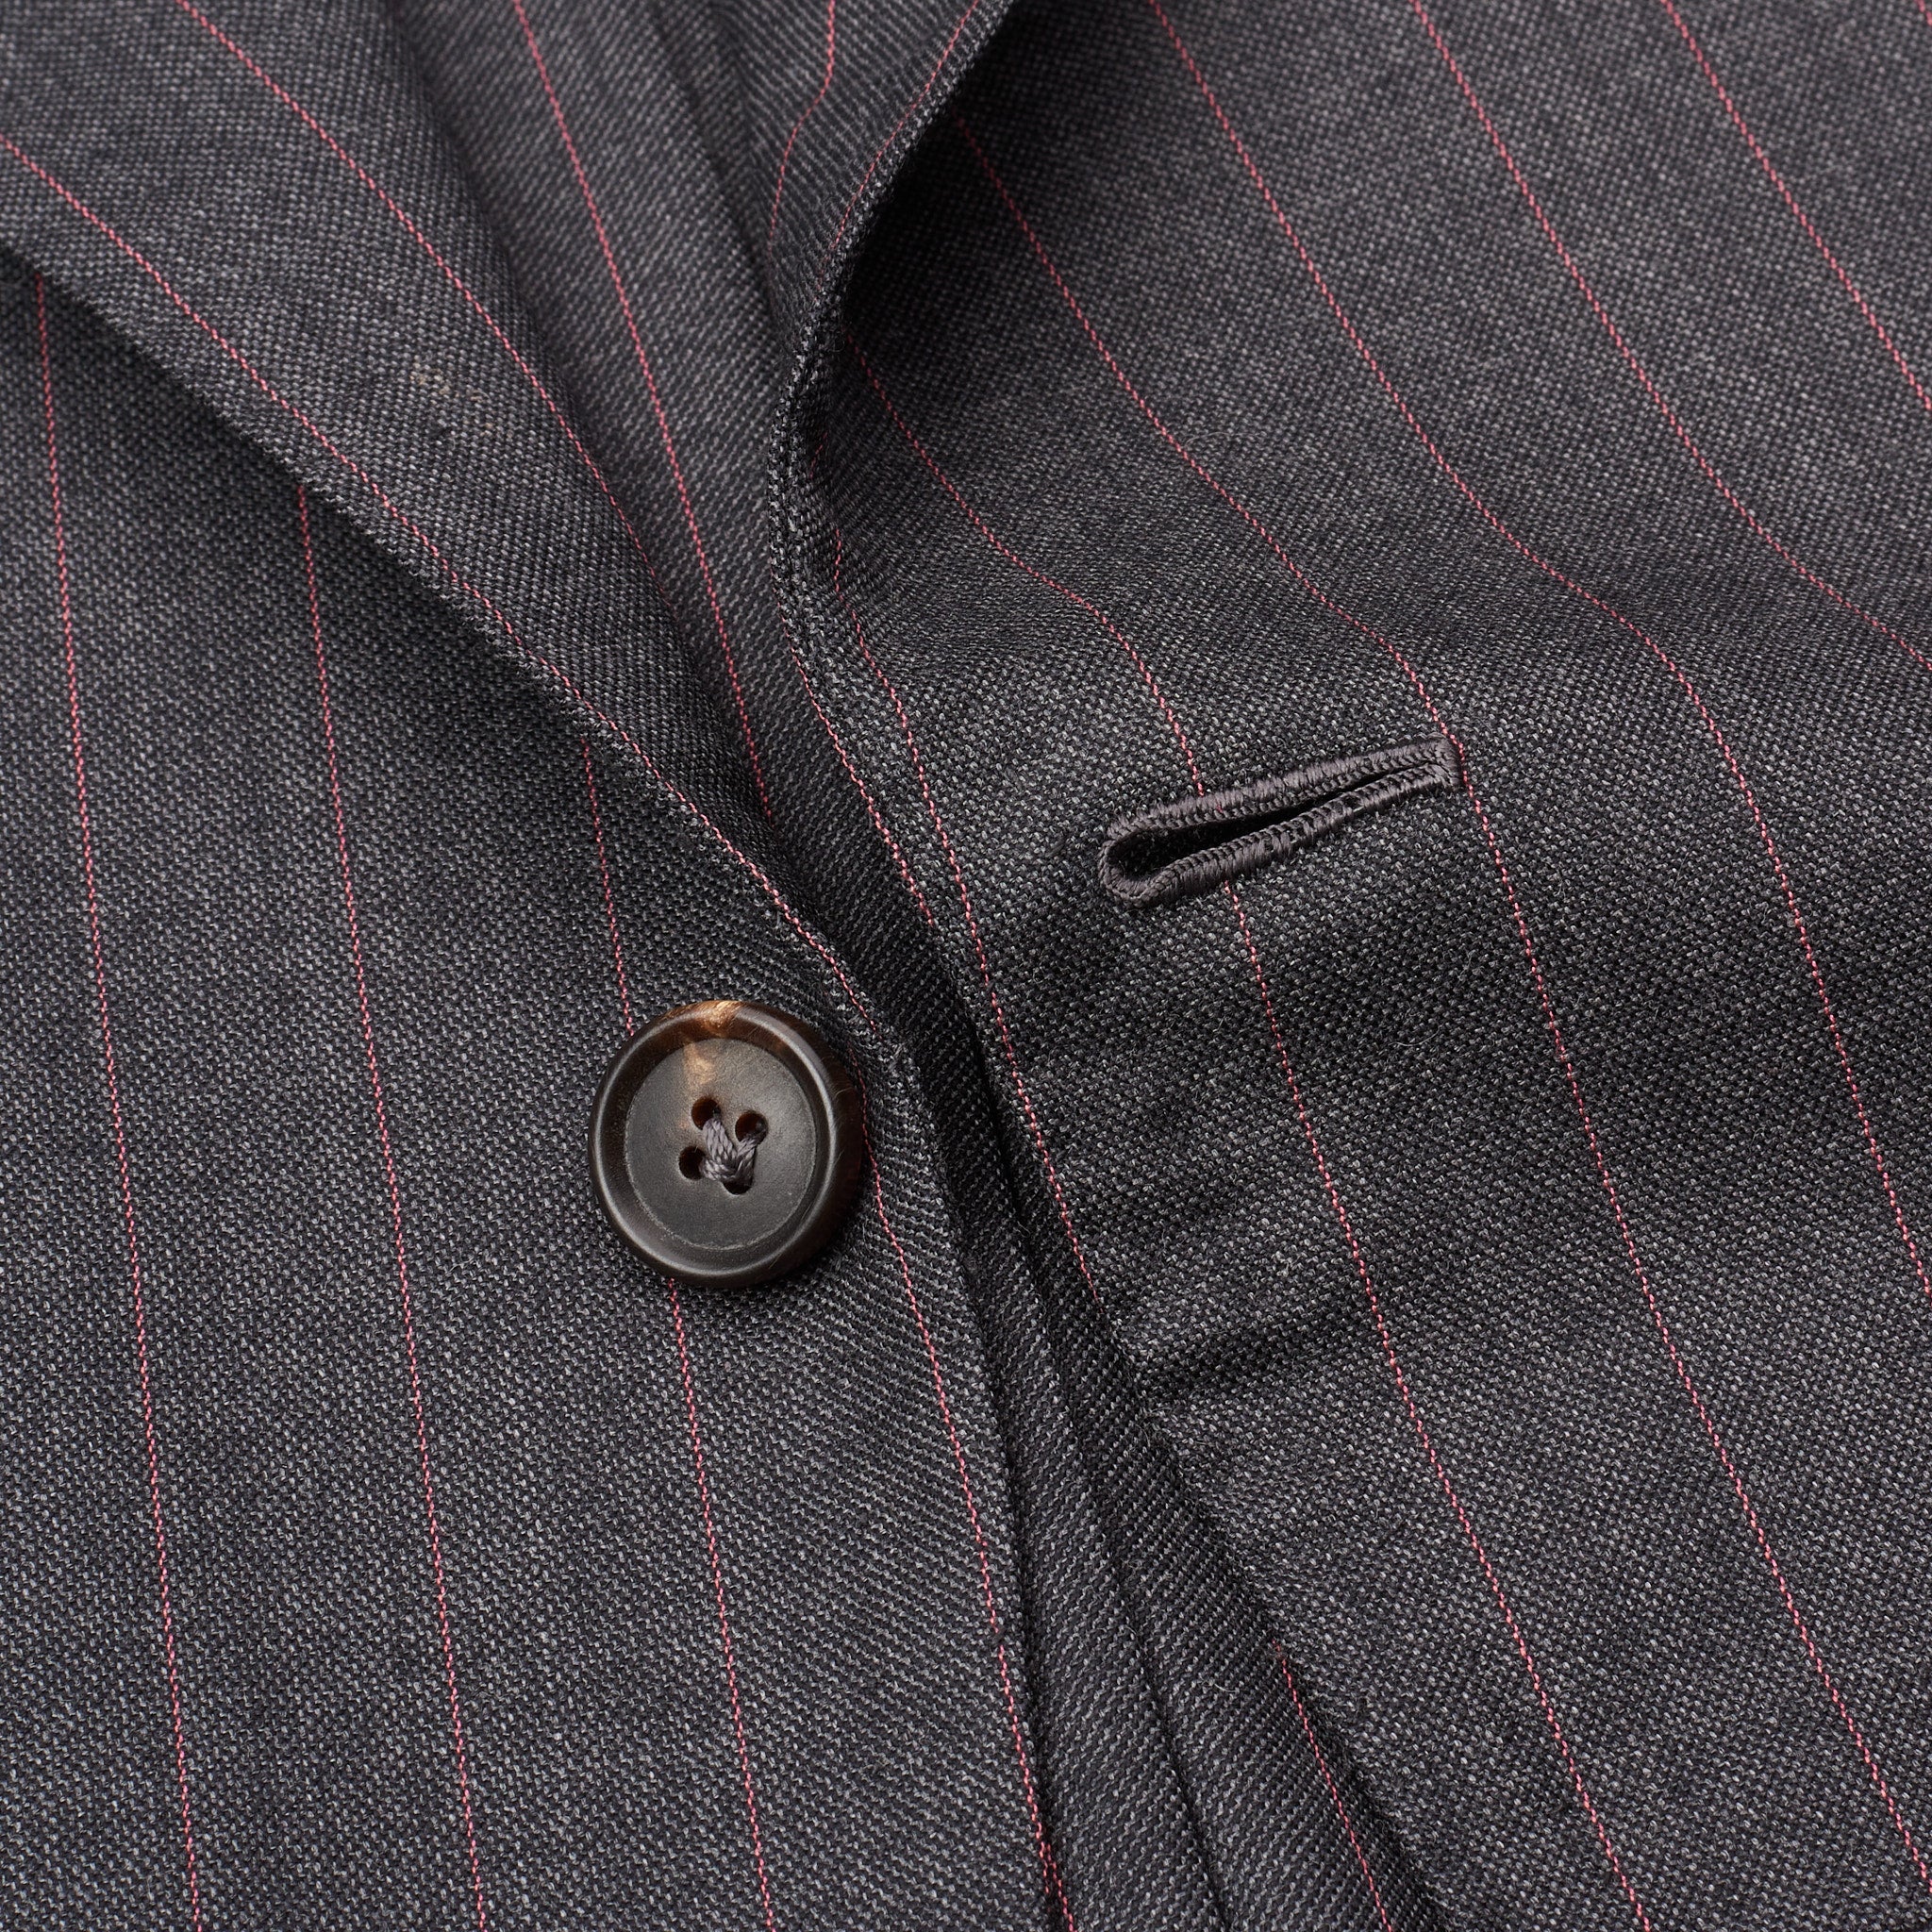 Sartoria CHIAIA Napoli Handmade Bespoke Gray Striped Wool Suit EU 50 NEW US 40